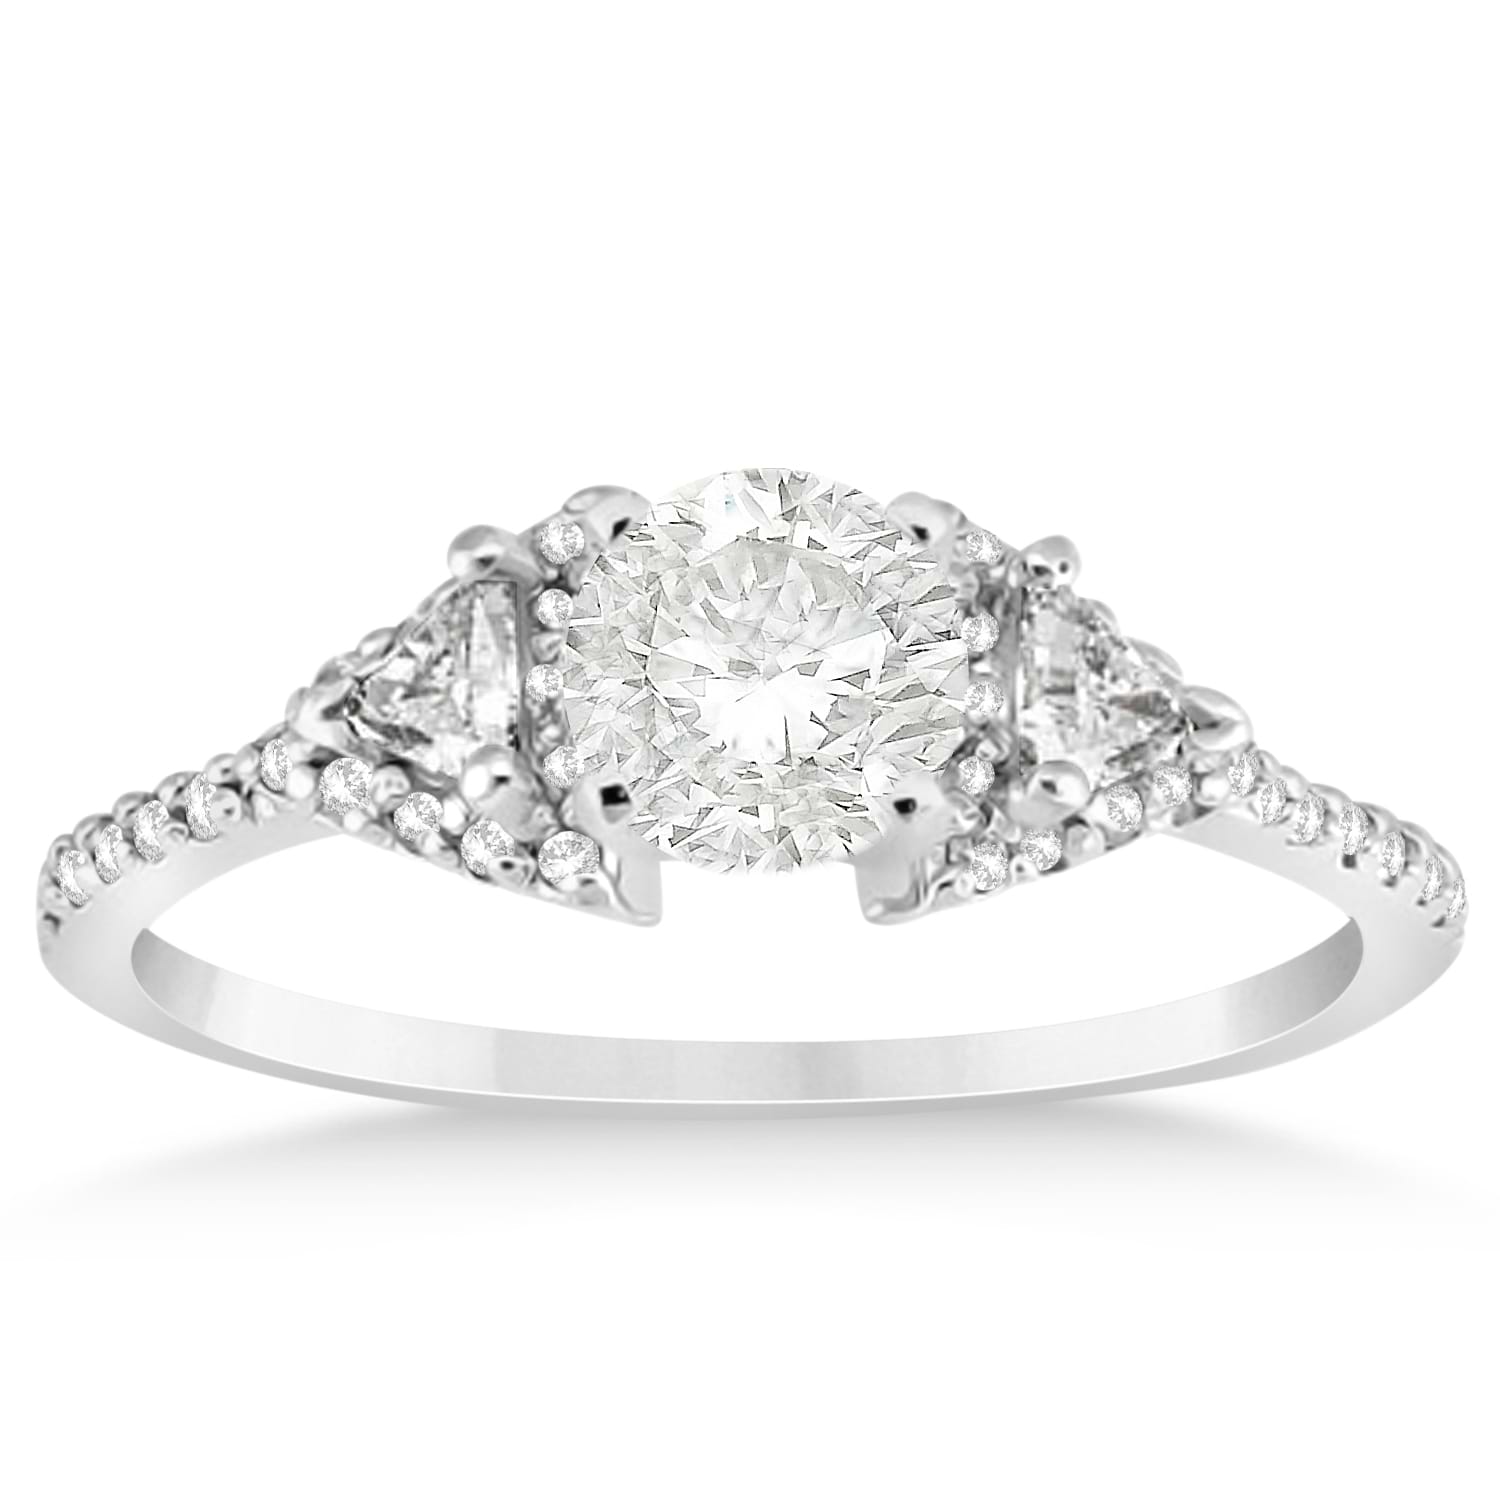 Diamond Trilliant Cut Engagement Ring Setting Palladium 0.27ct